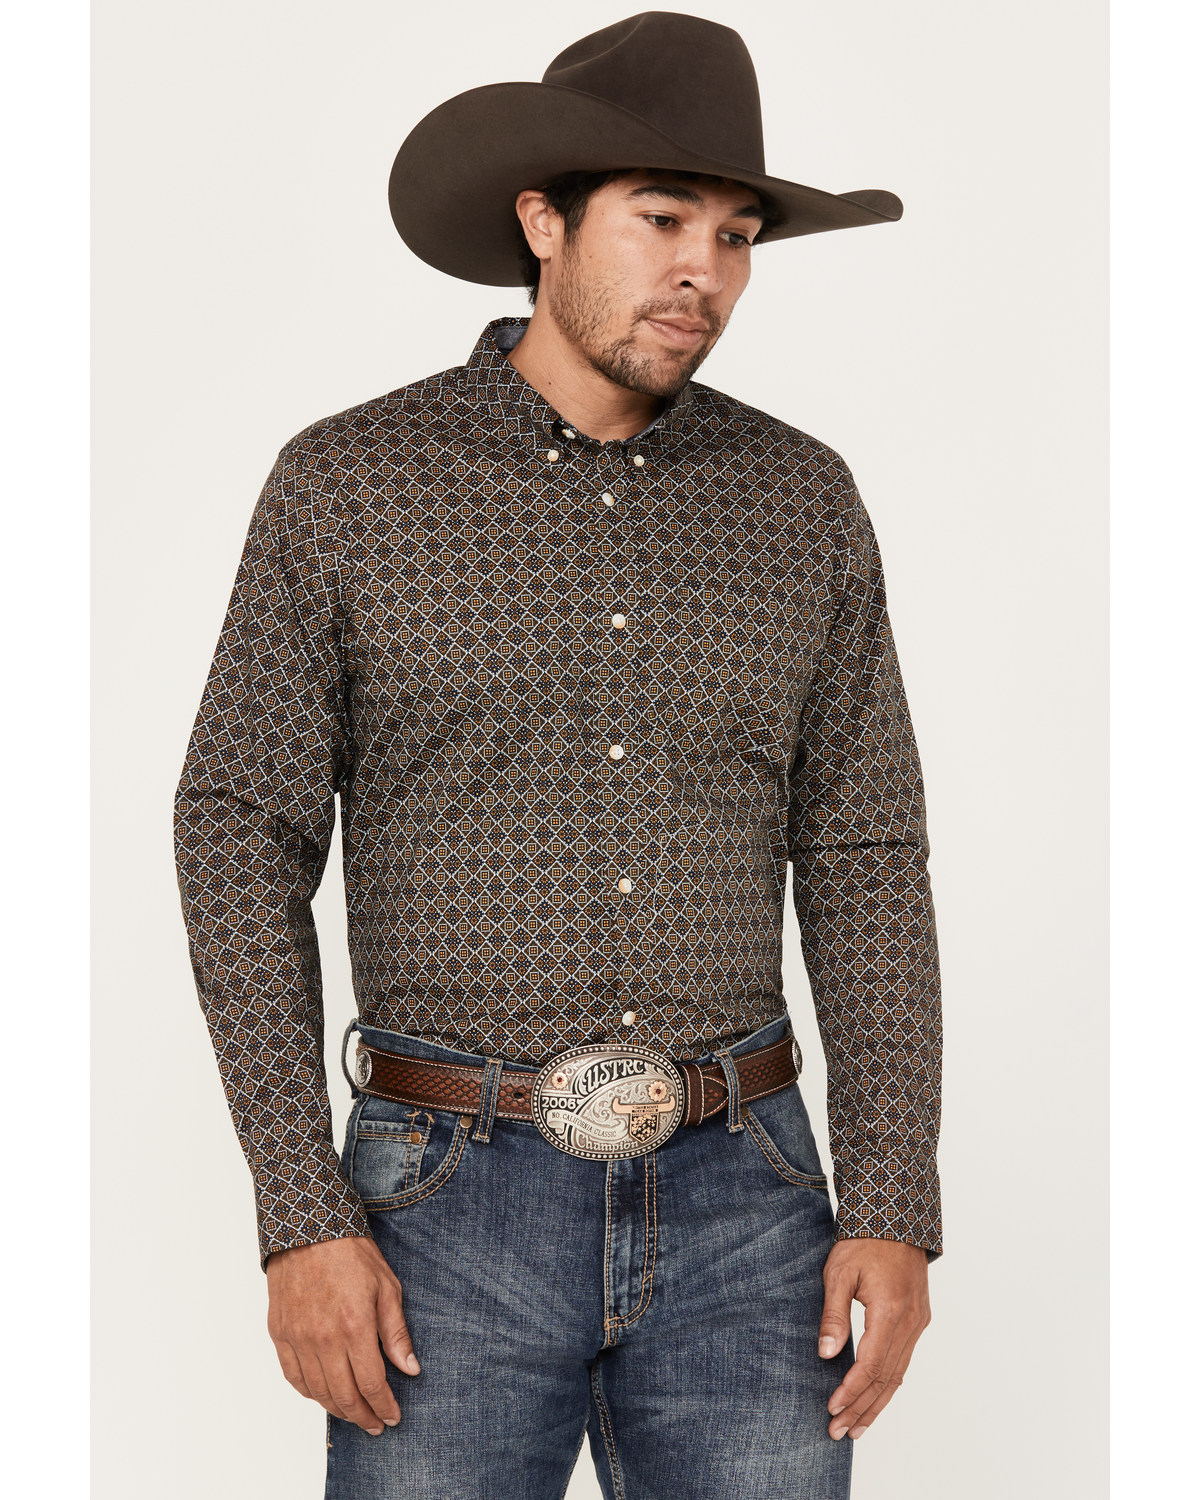 Cody James Men's Money Maker Print Long Sleeve Button Down Western Shirt - Big